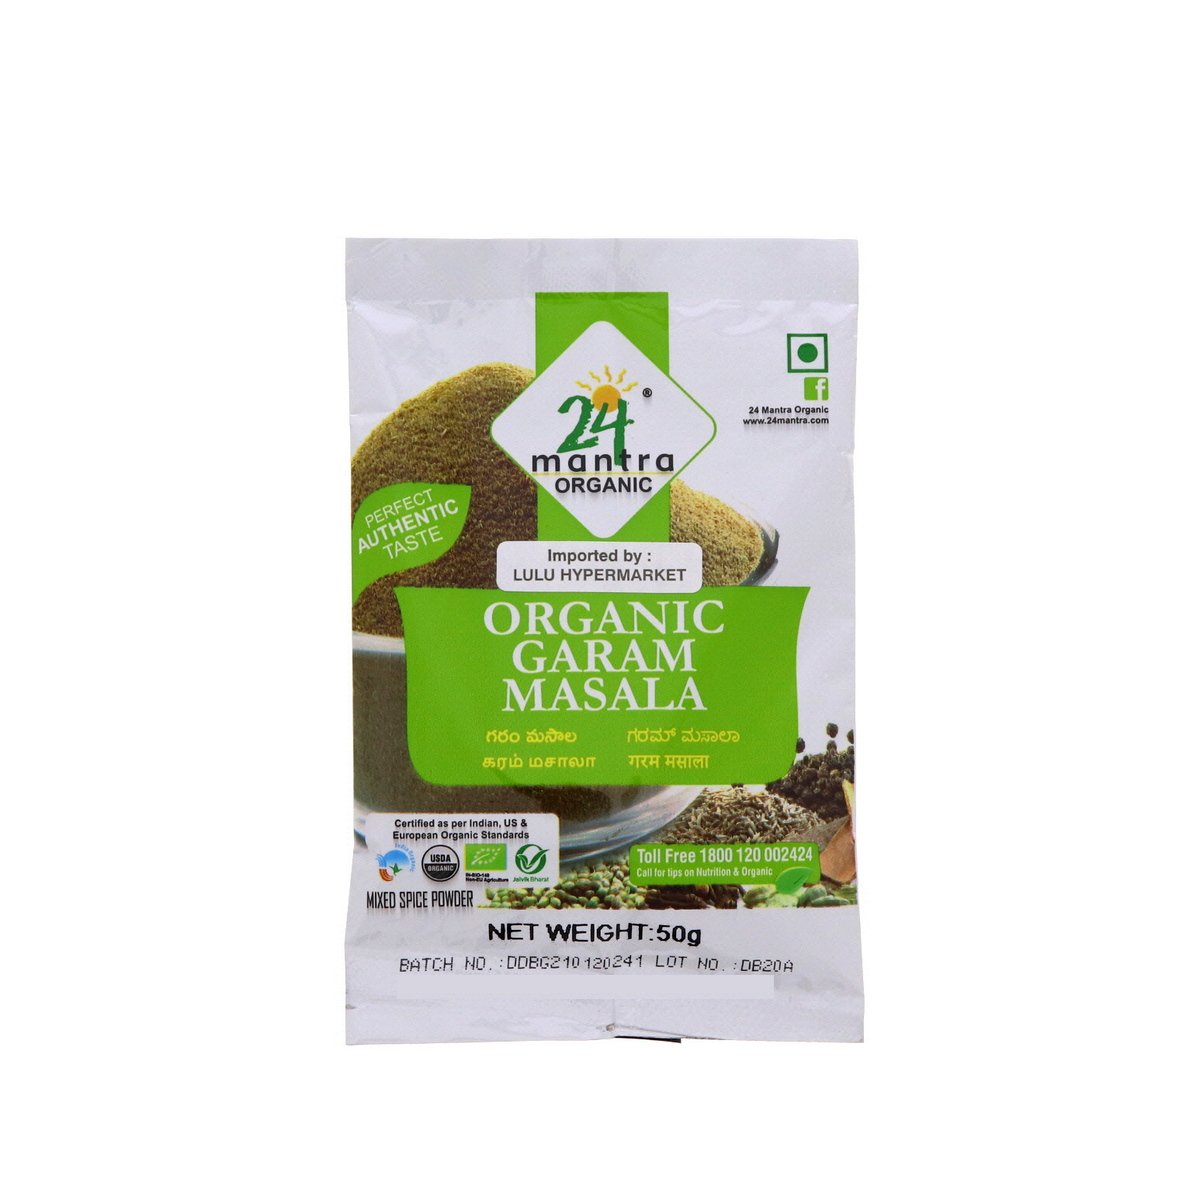 24 Mantra Organic Garam Masala 50 g